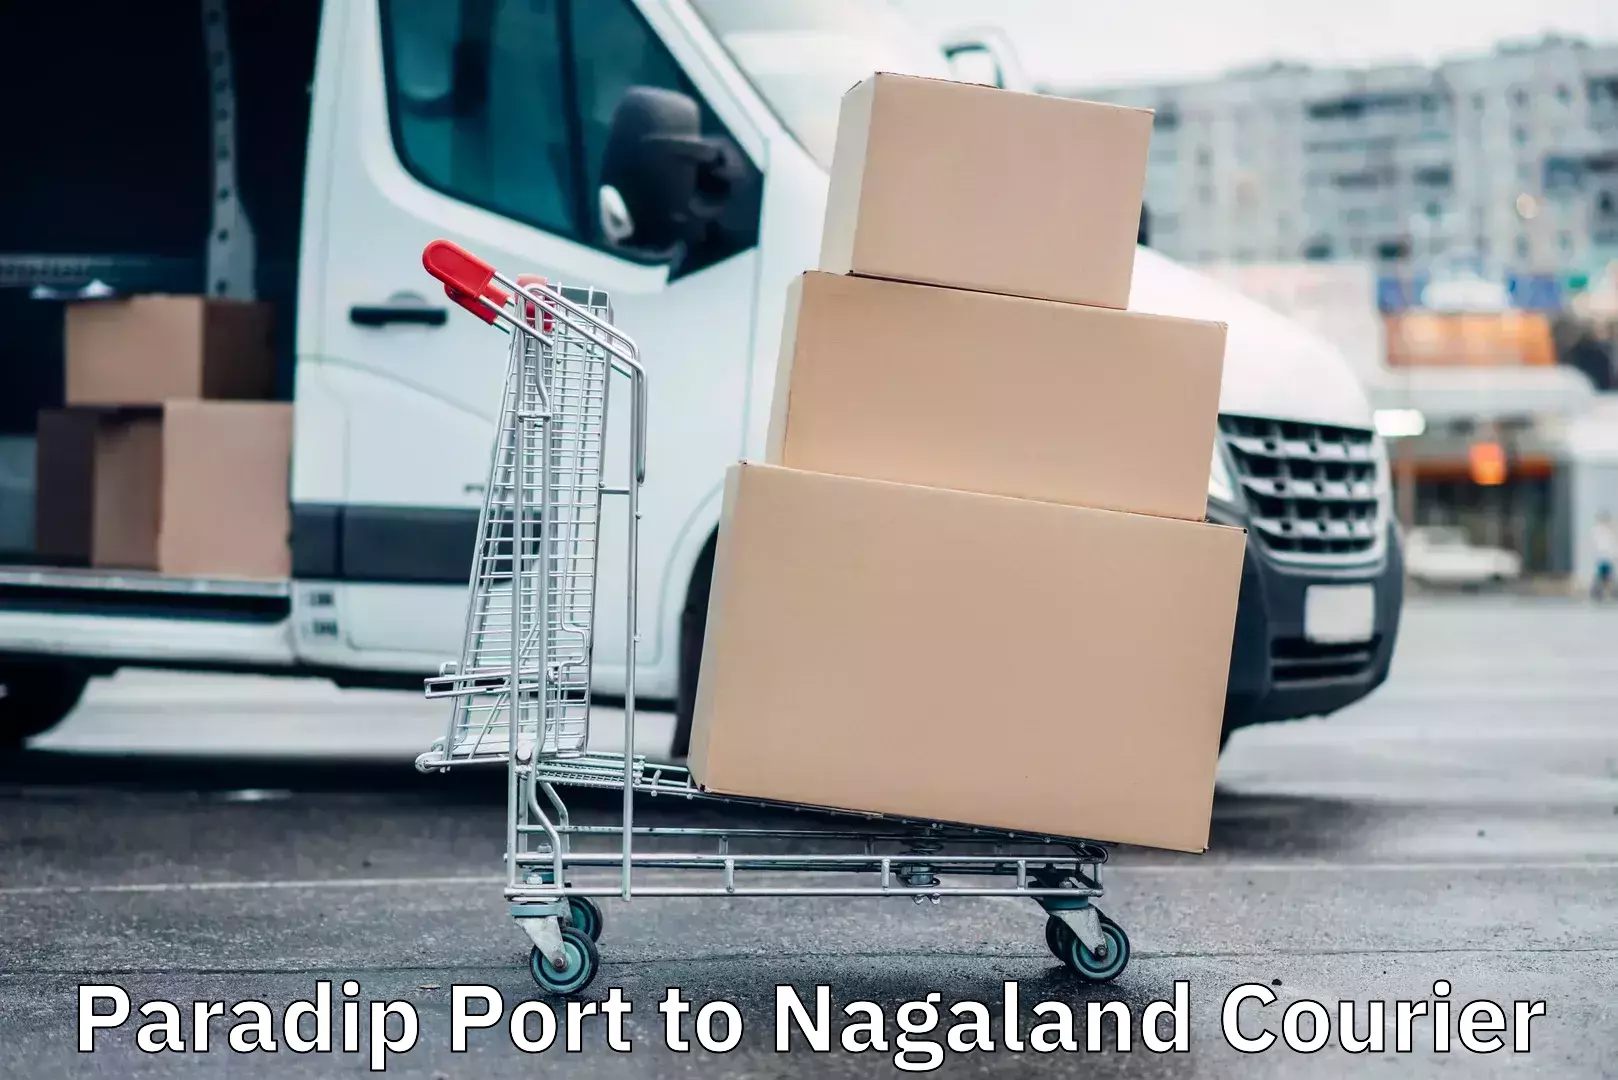 Comprehensive shipping network Paradip Port to Nagaland